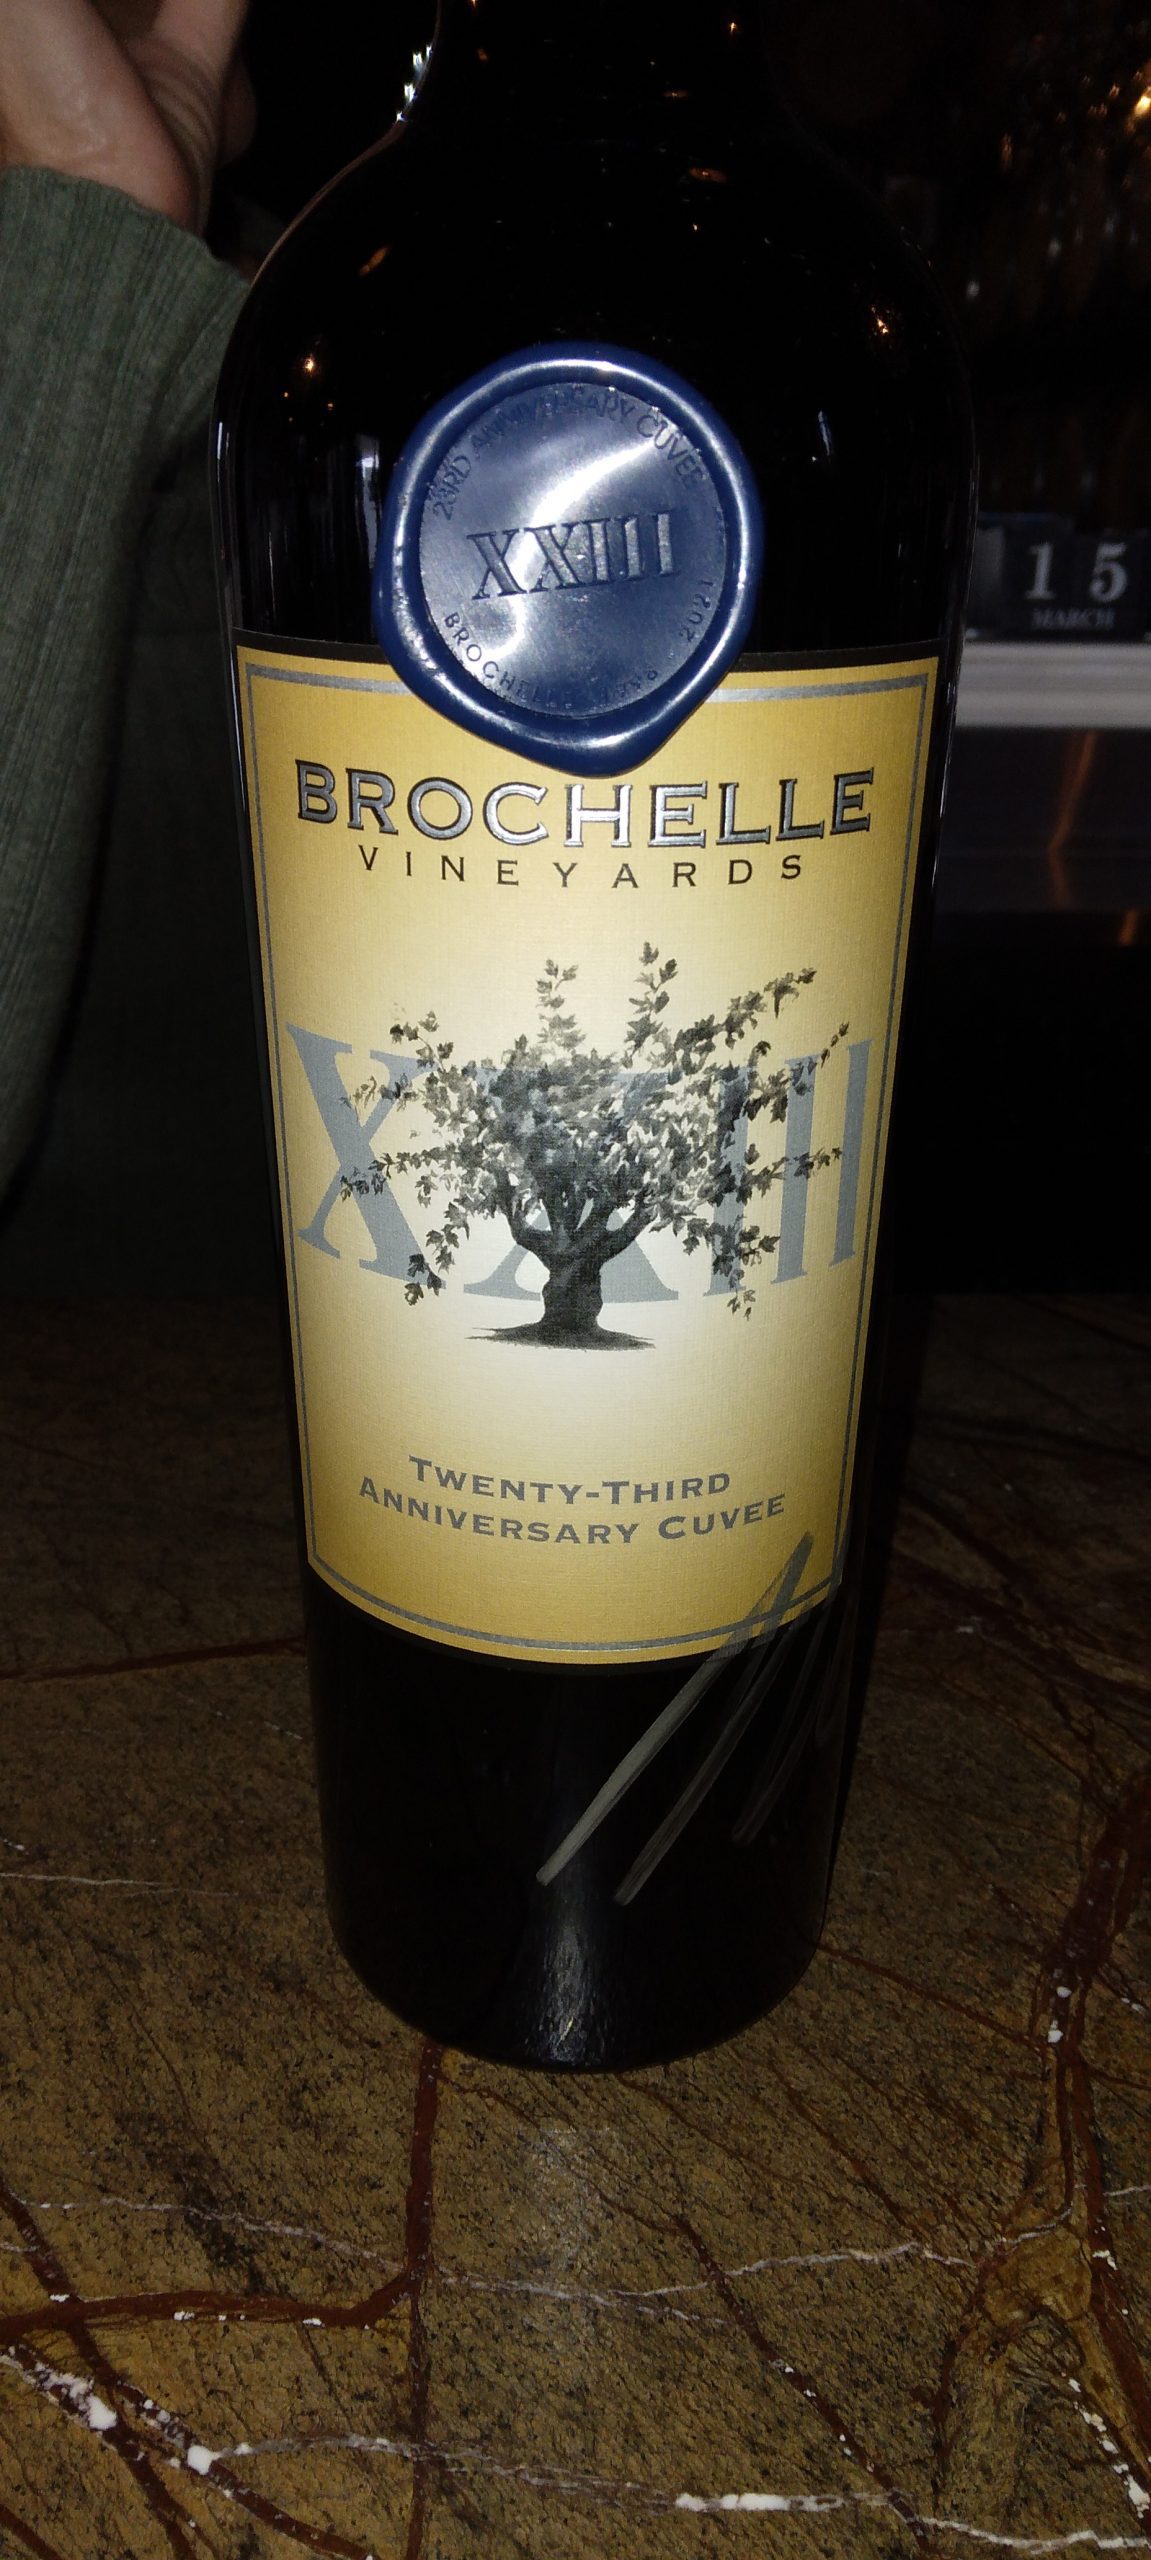 Brochelle Vineyards wine bottle